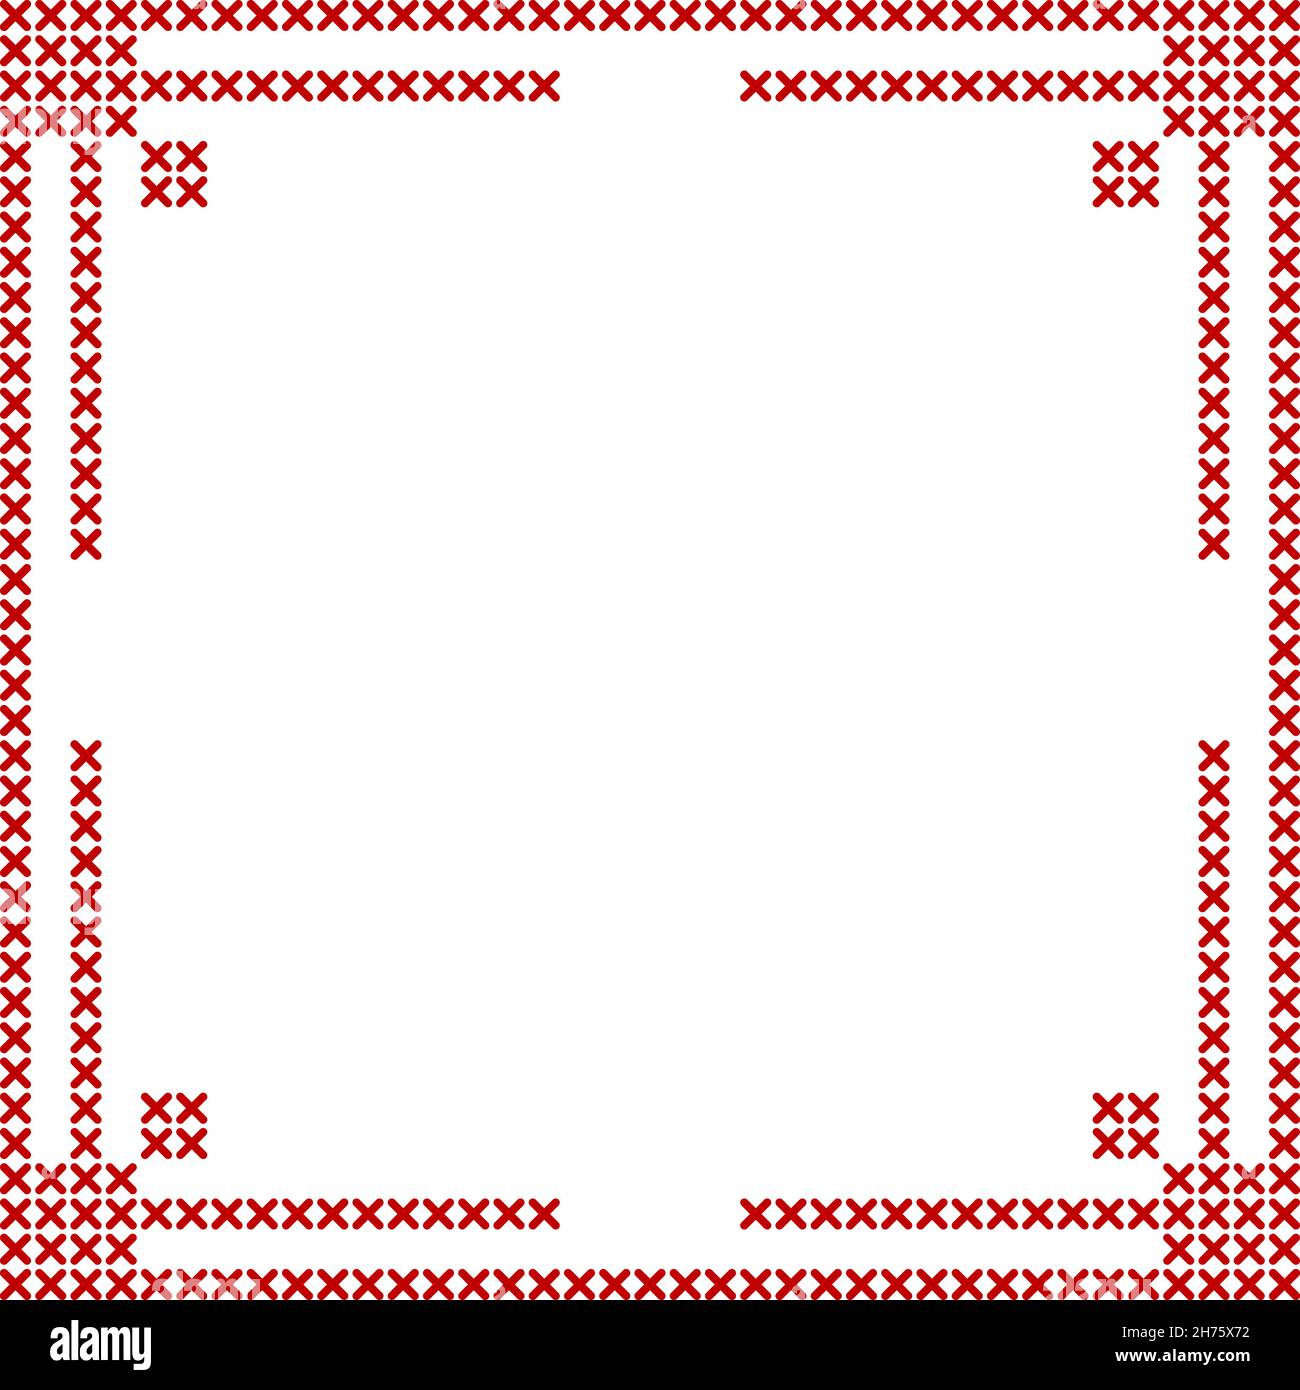 Square Border Cross Stitch Pattern, Christmas Border, Cross Stitch Frame,  Floral Border 